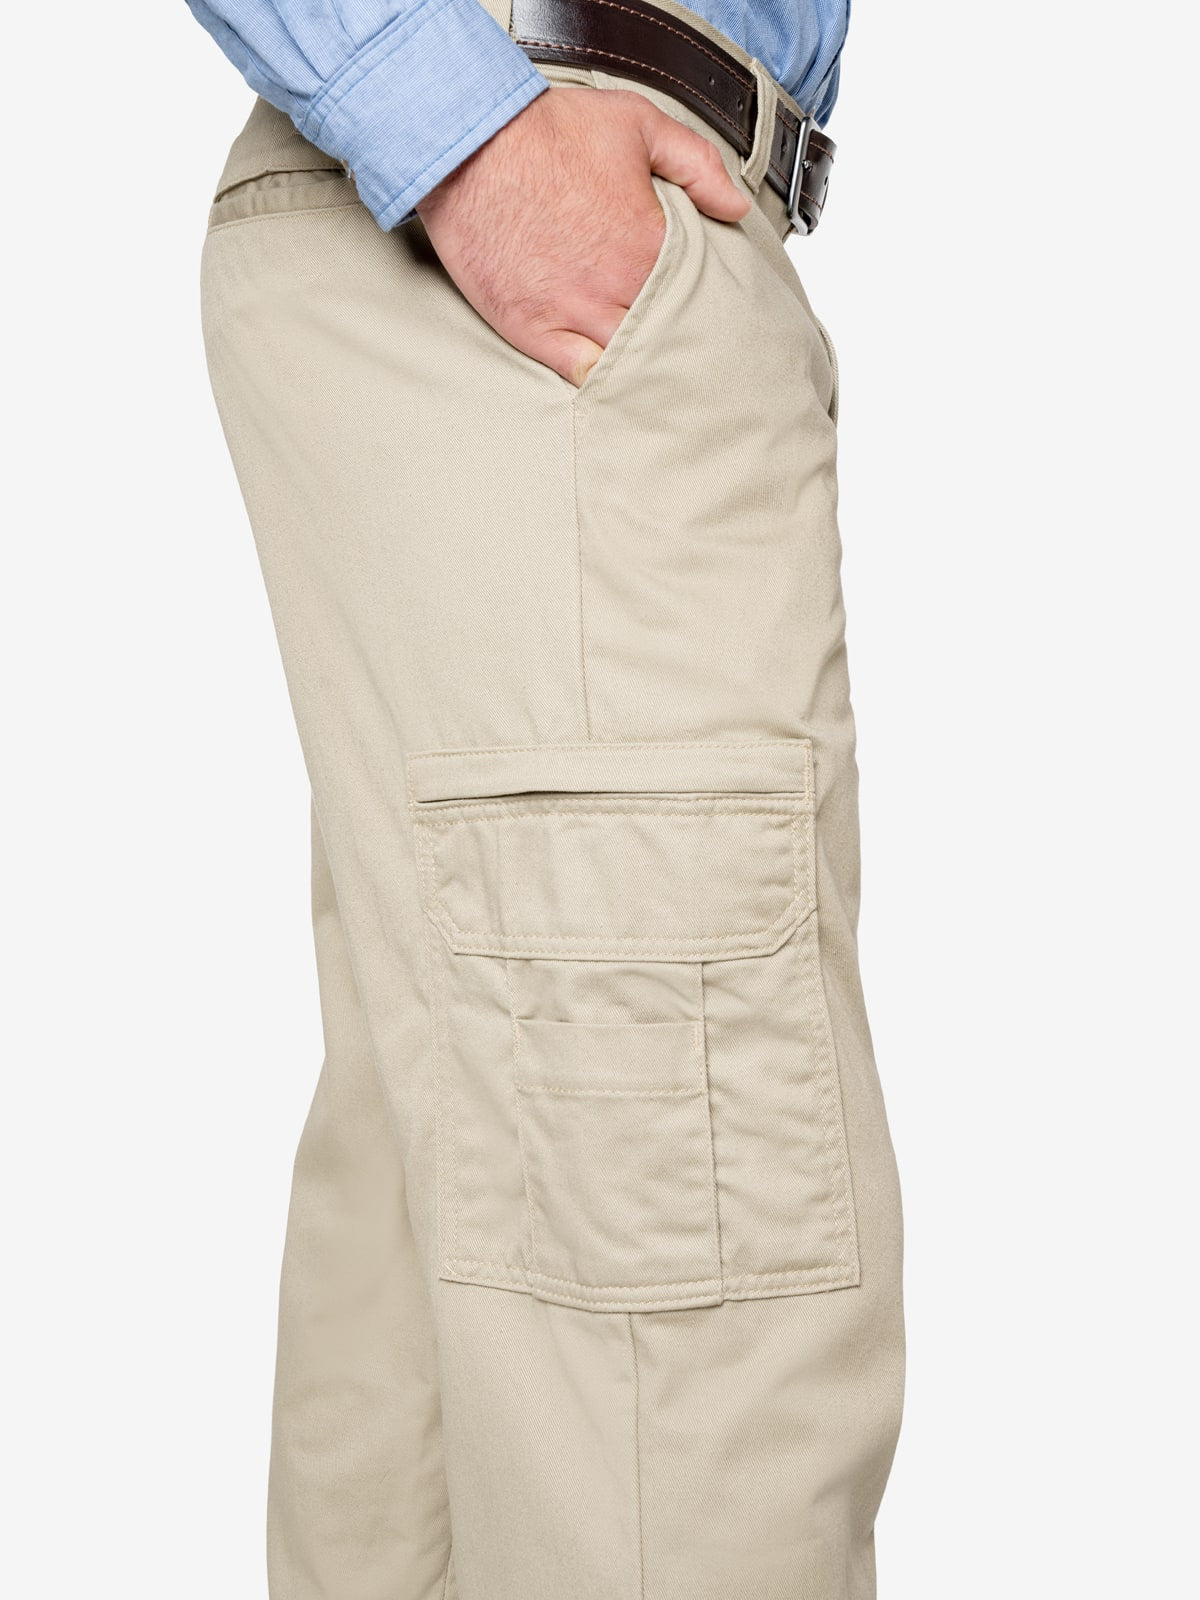 Insect Shield Men's Multi-pocket Cargo Pants